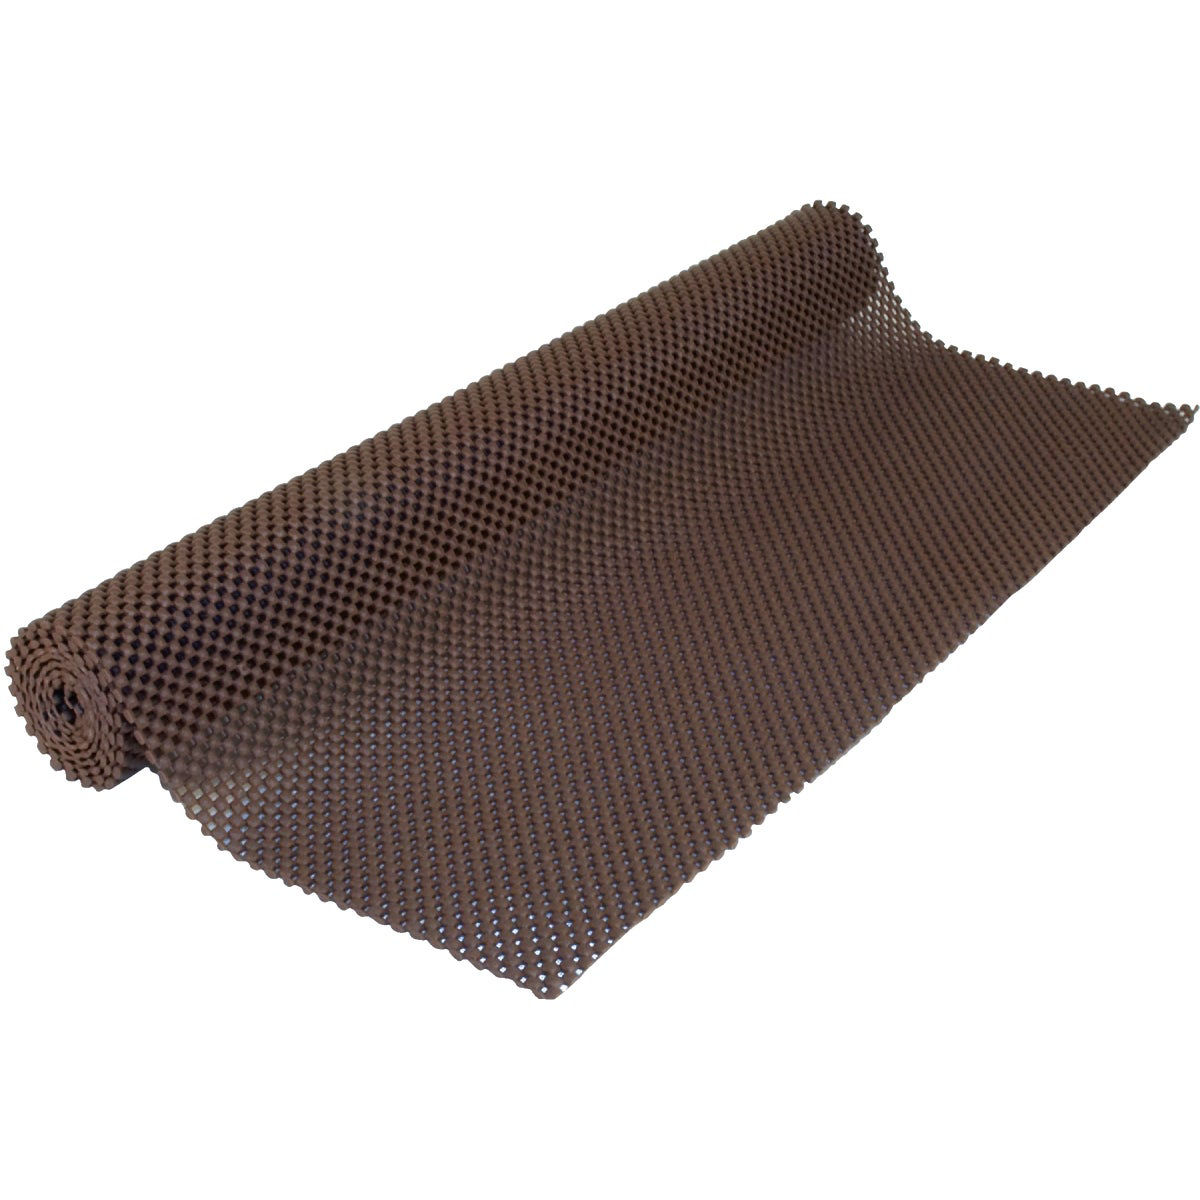 Con-Tact 12 In. x 4 Ft. Chocolate Grip Premium Non-Adhesive Shelf